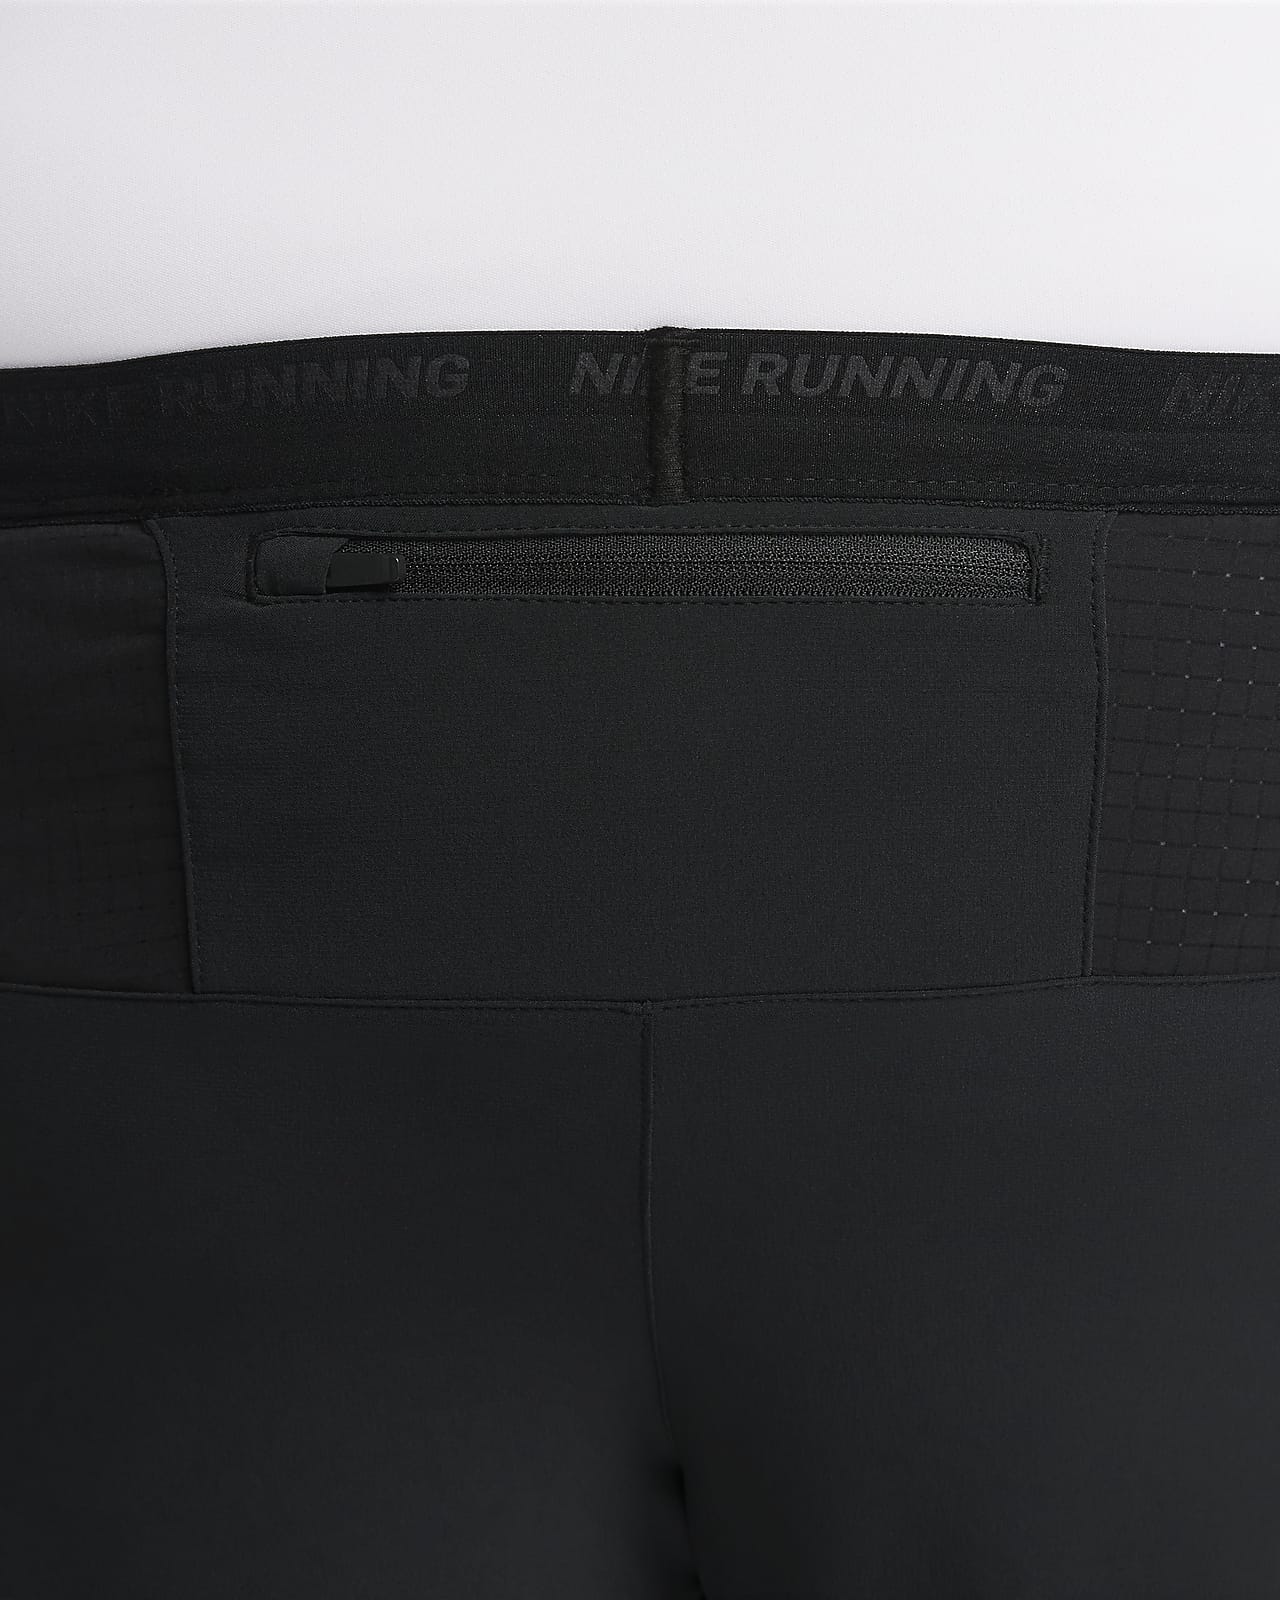 Nike Phenom Elite Knit Running Pants Size 3XL Alligator Green DQ4740 334 New